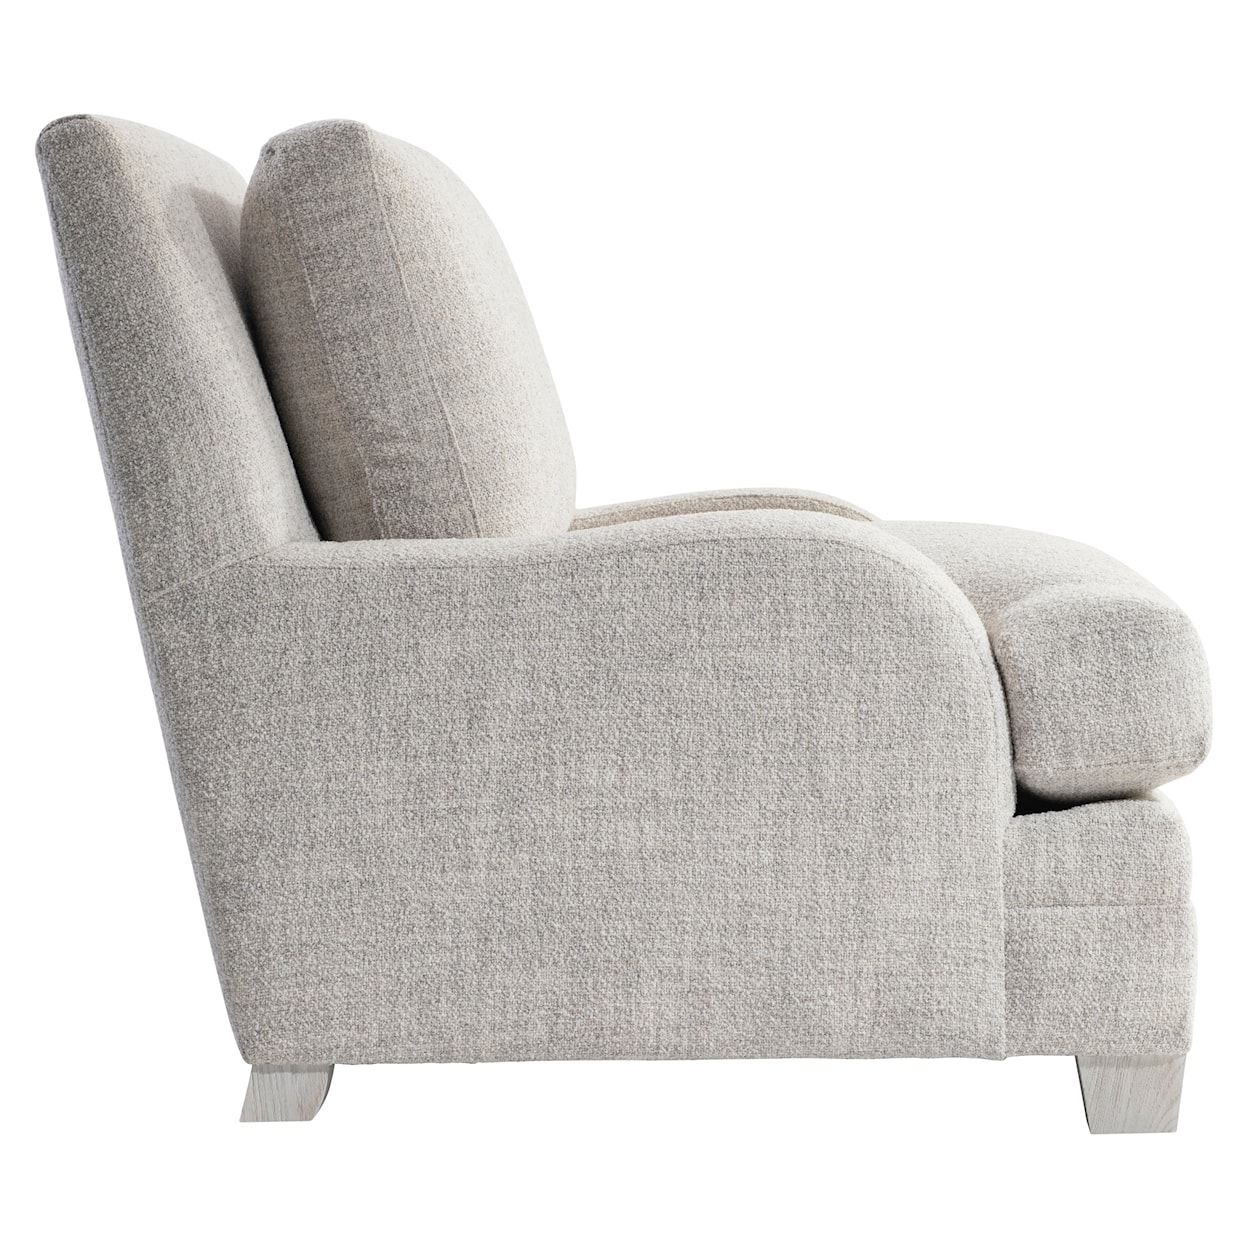 Bernhardt Plush Rollins Fabric Chair